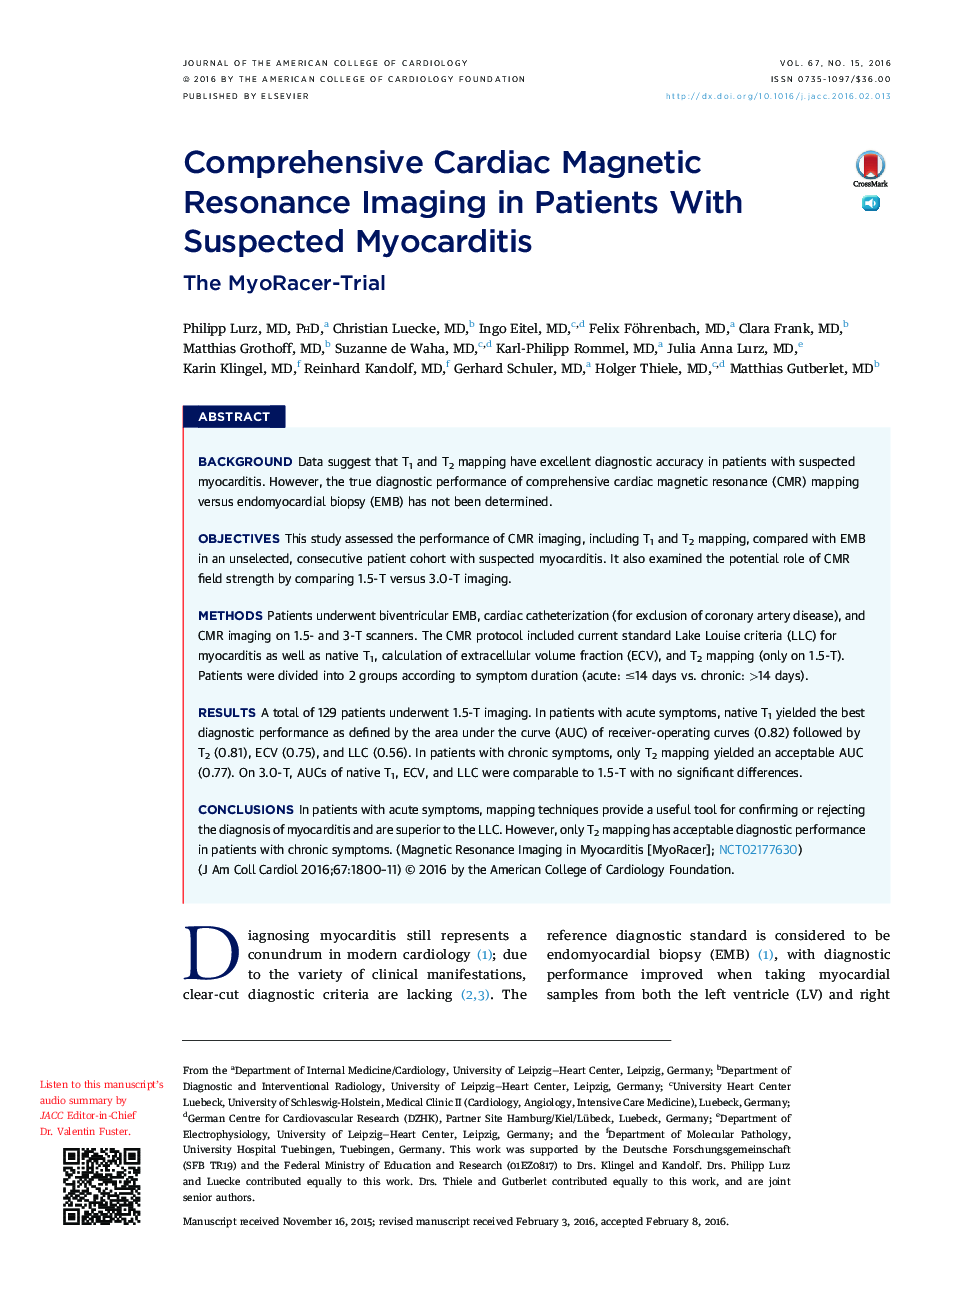 Comprehensive Cardiac Magnetic Resonance Imaging in Patients With Suspected Myocarditis: The MyoRacer-Trial